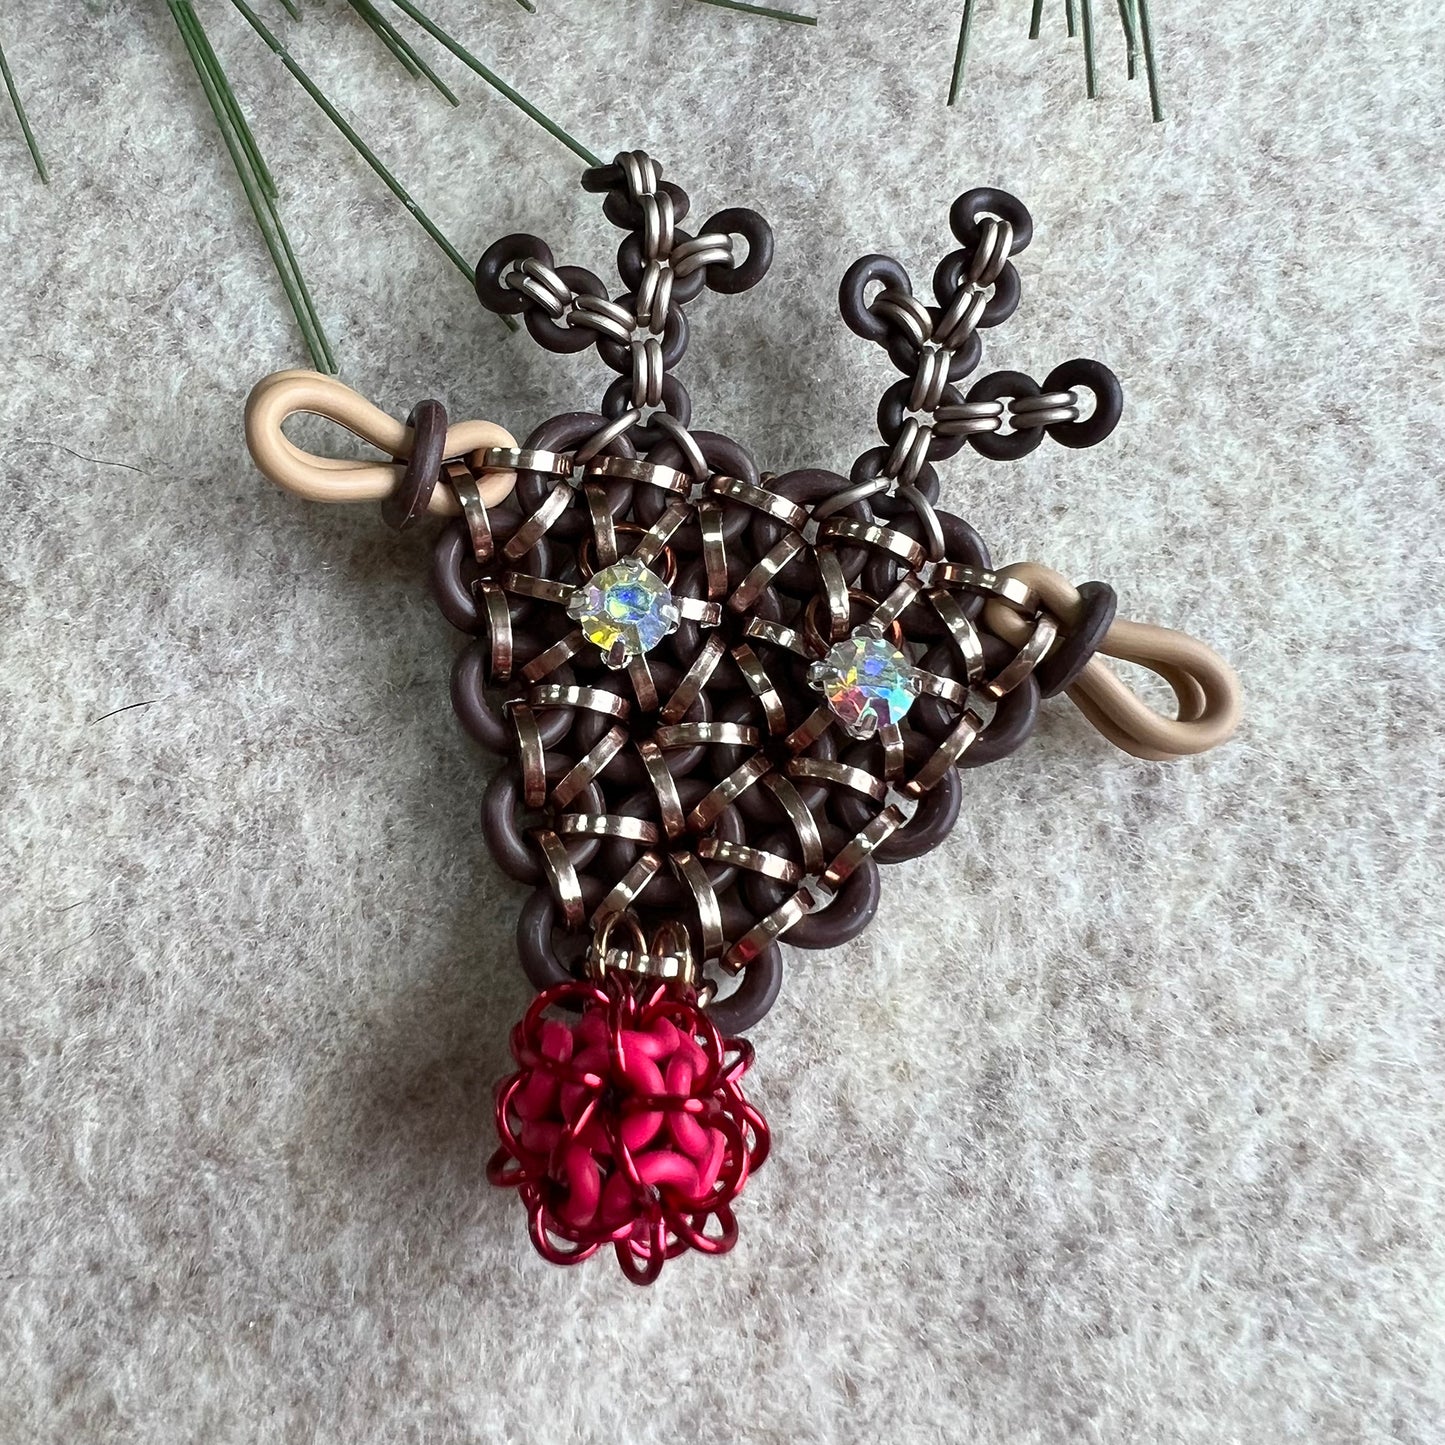 Rudolph Sparkle Pendant/Ornament Kit & Video Class